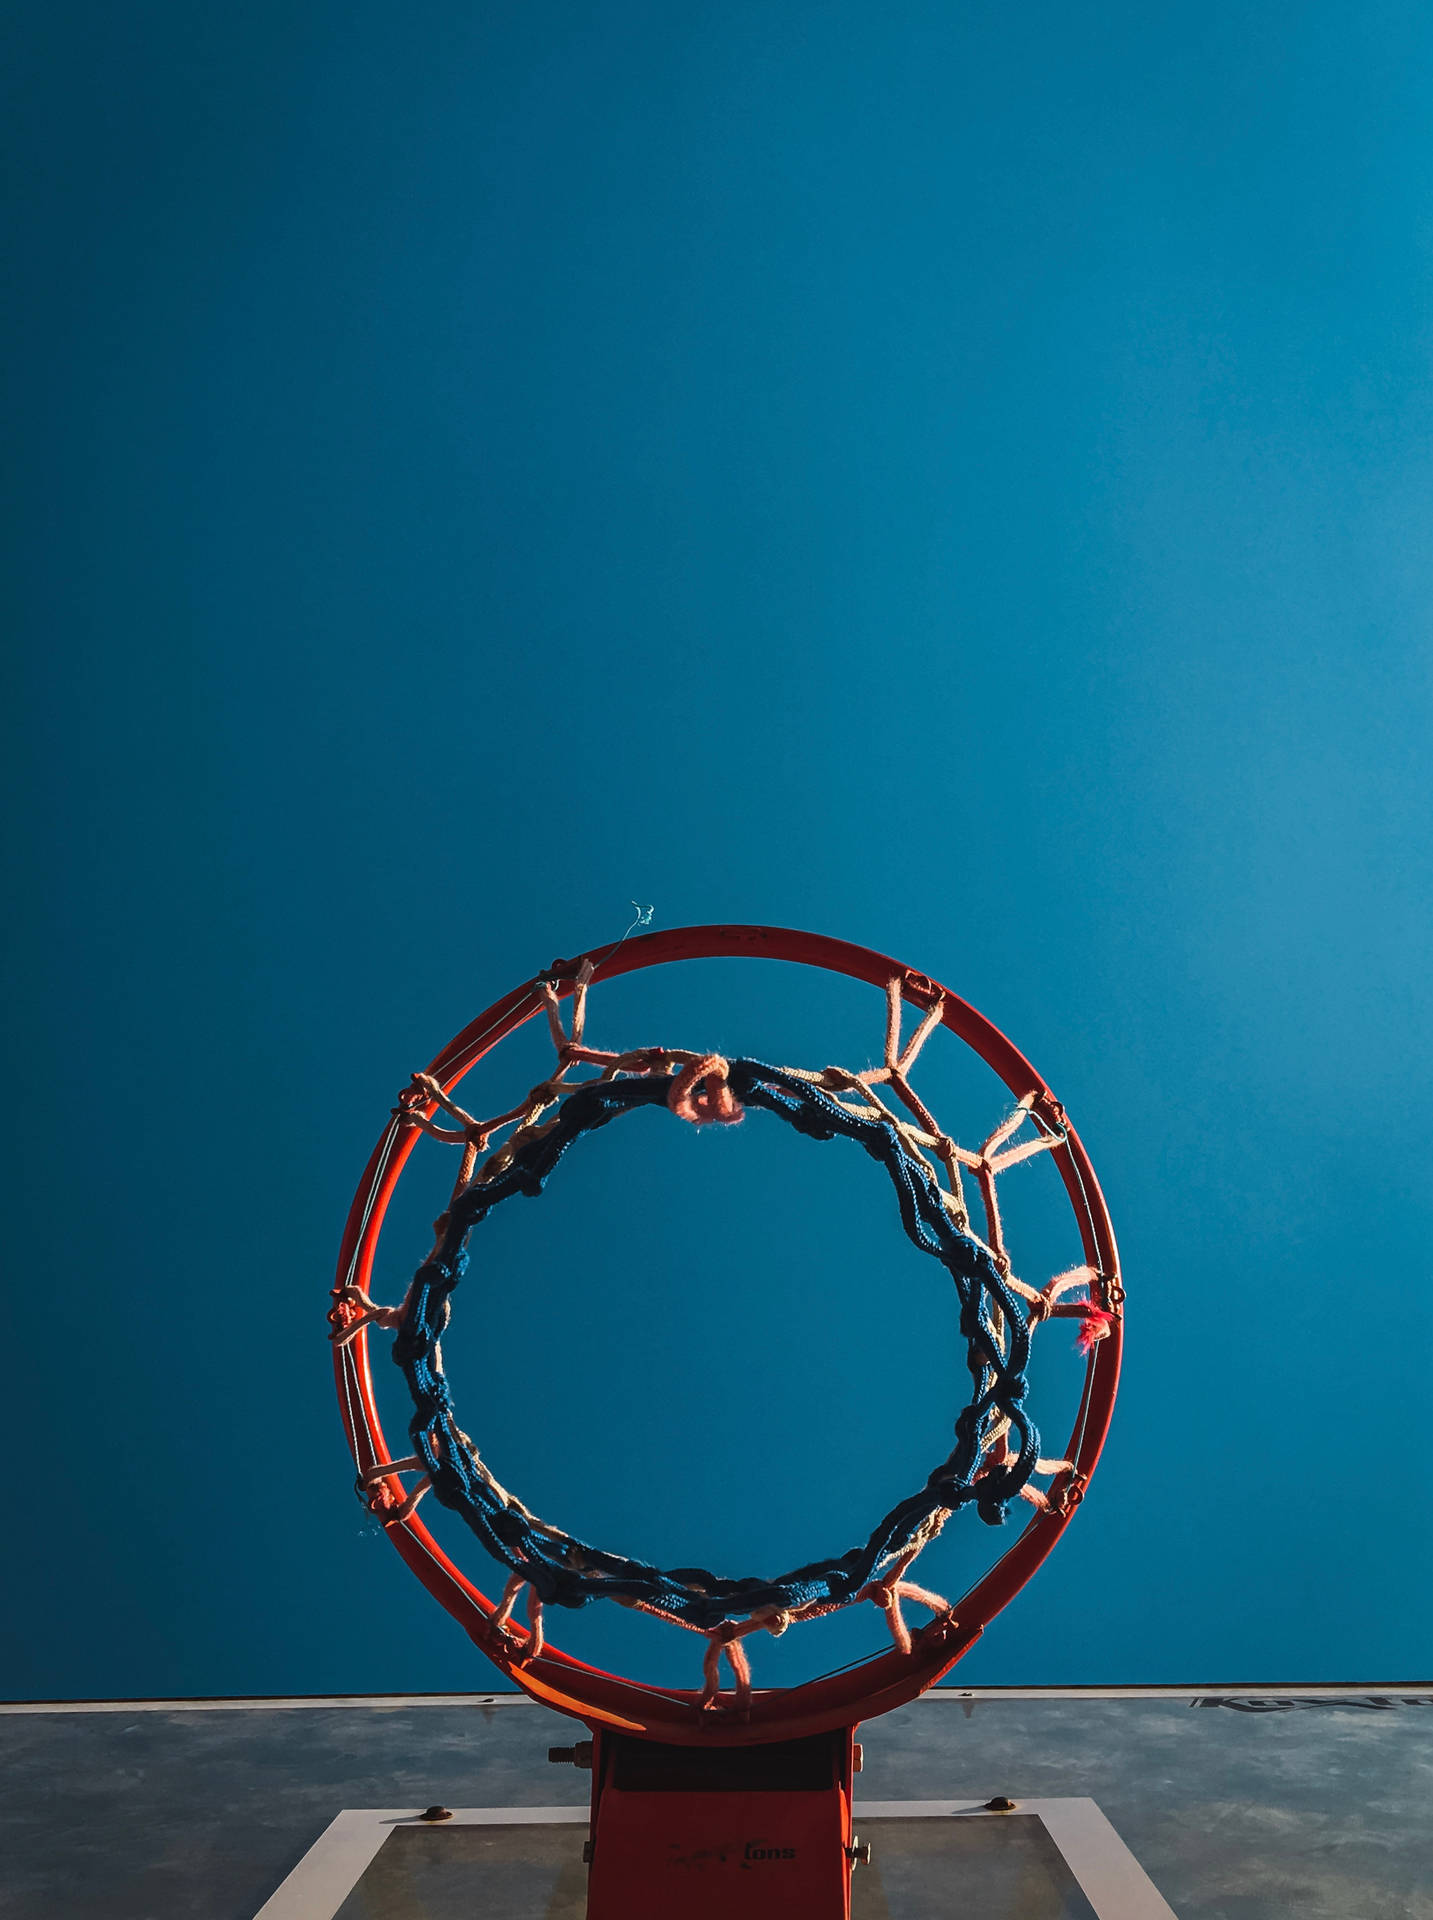 Hd Basketball Ring Wallpaper